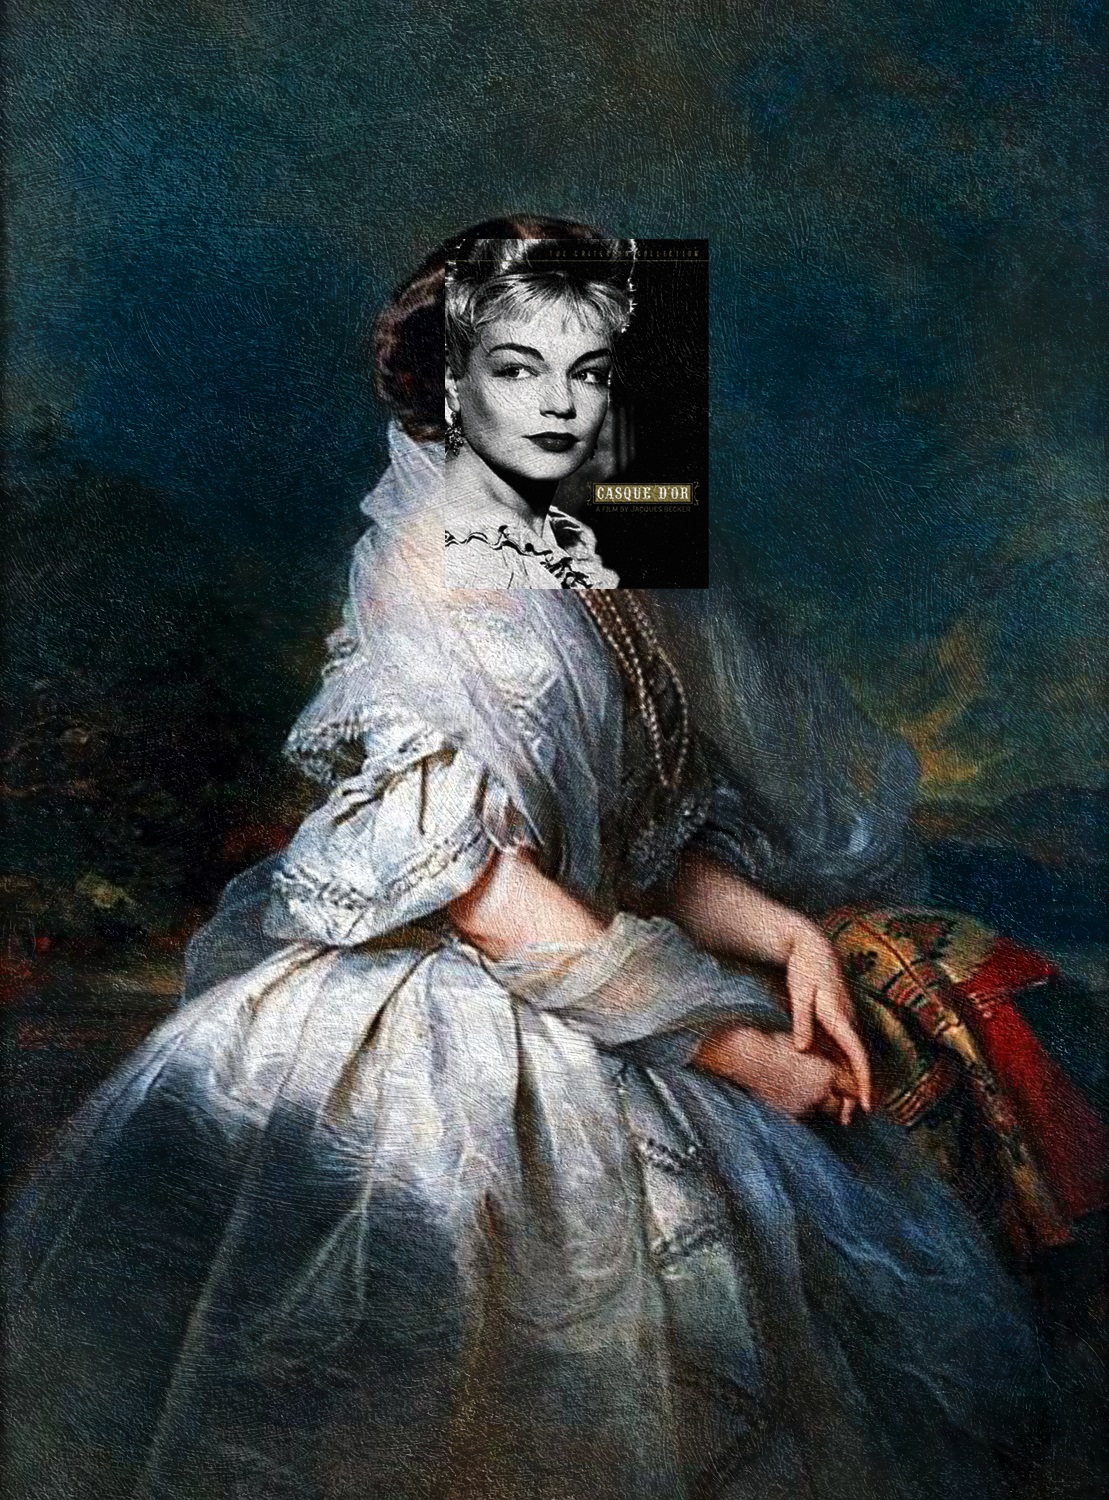 Casque D'Or by Jacques Becker + Portrait of Eliza Franciszka of Branicki Krasińska by Franz Xaver Winterhalter